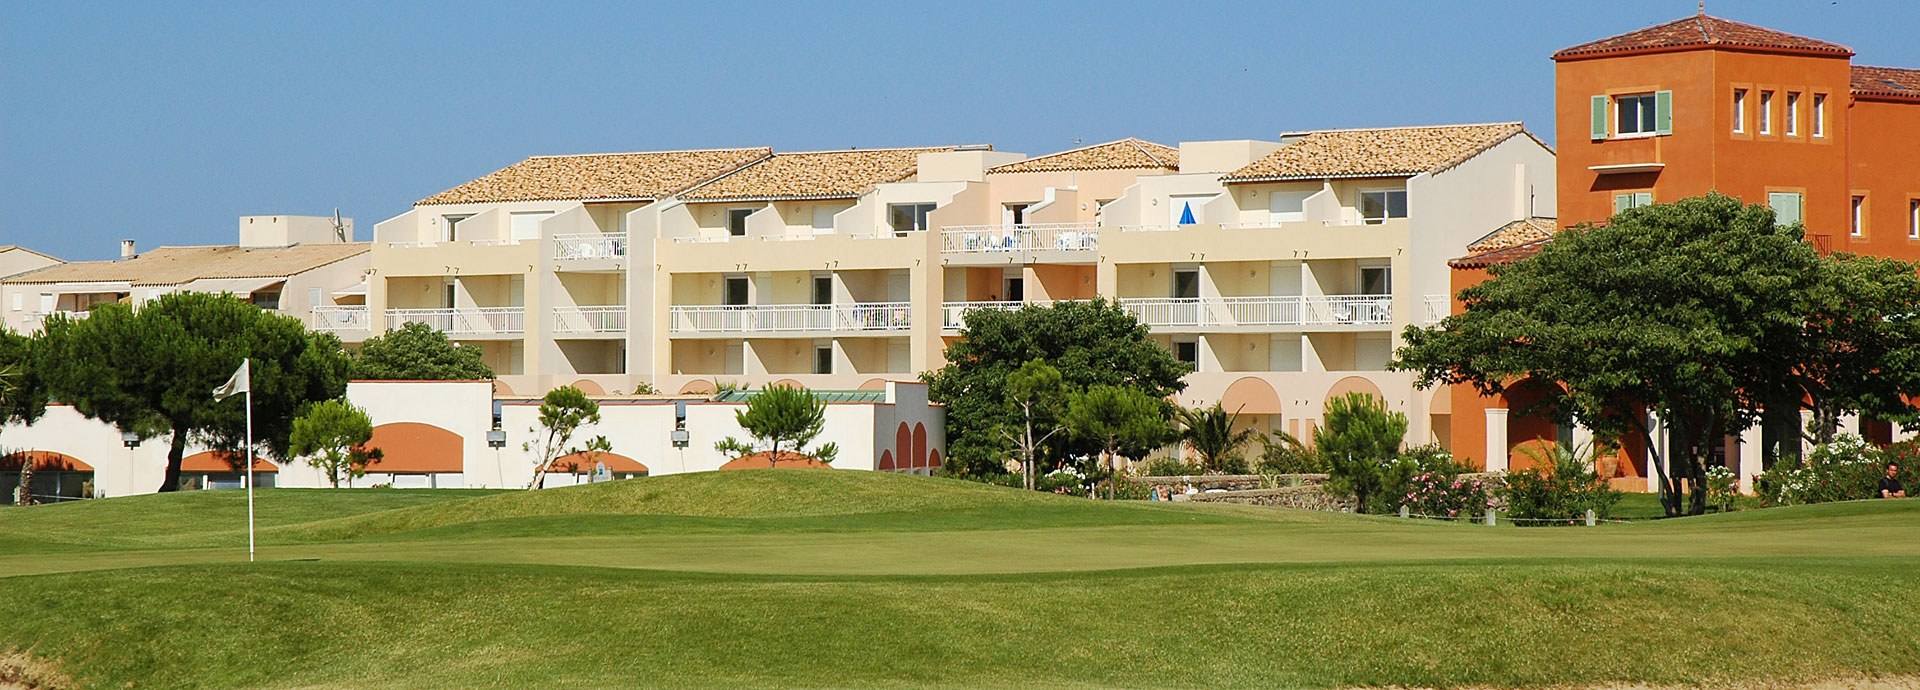 Holiday rental at Cap d'Agde  : Palmyra Golf residence